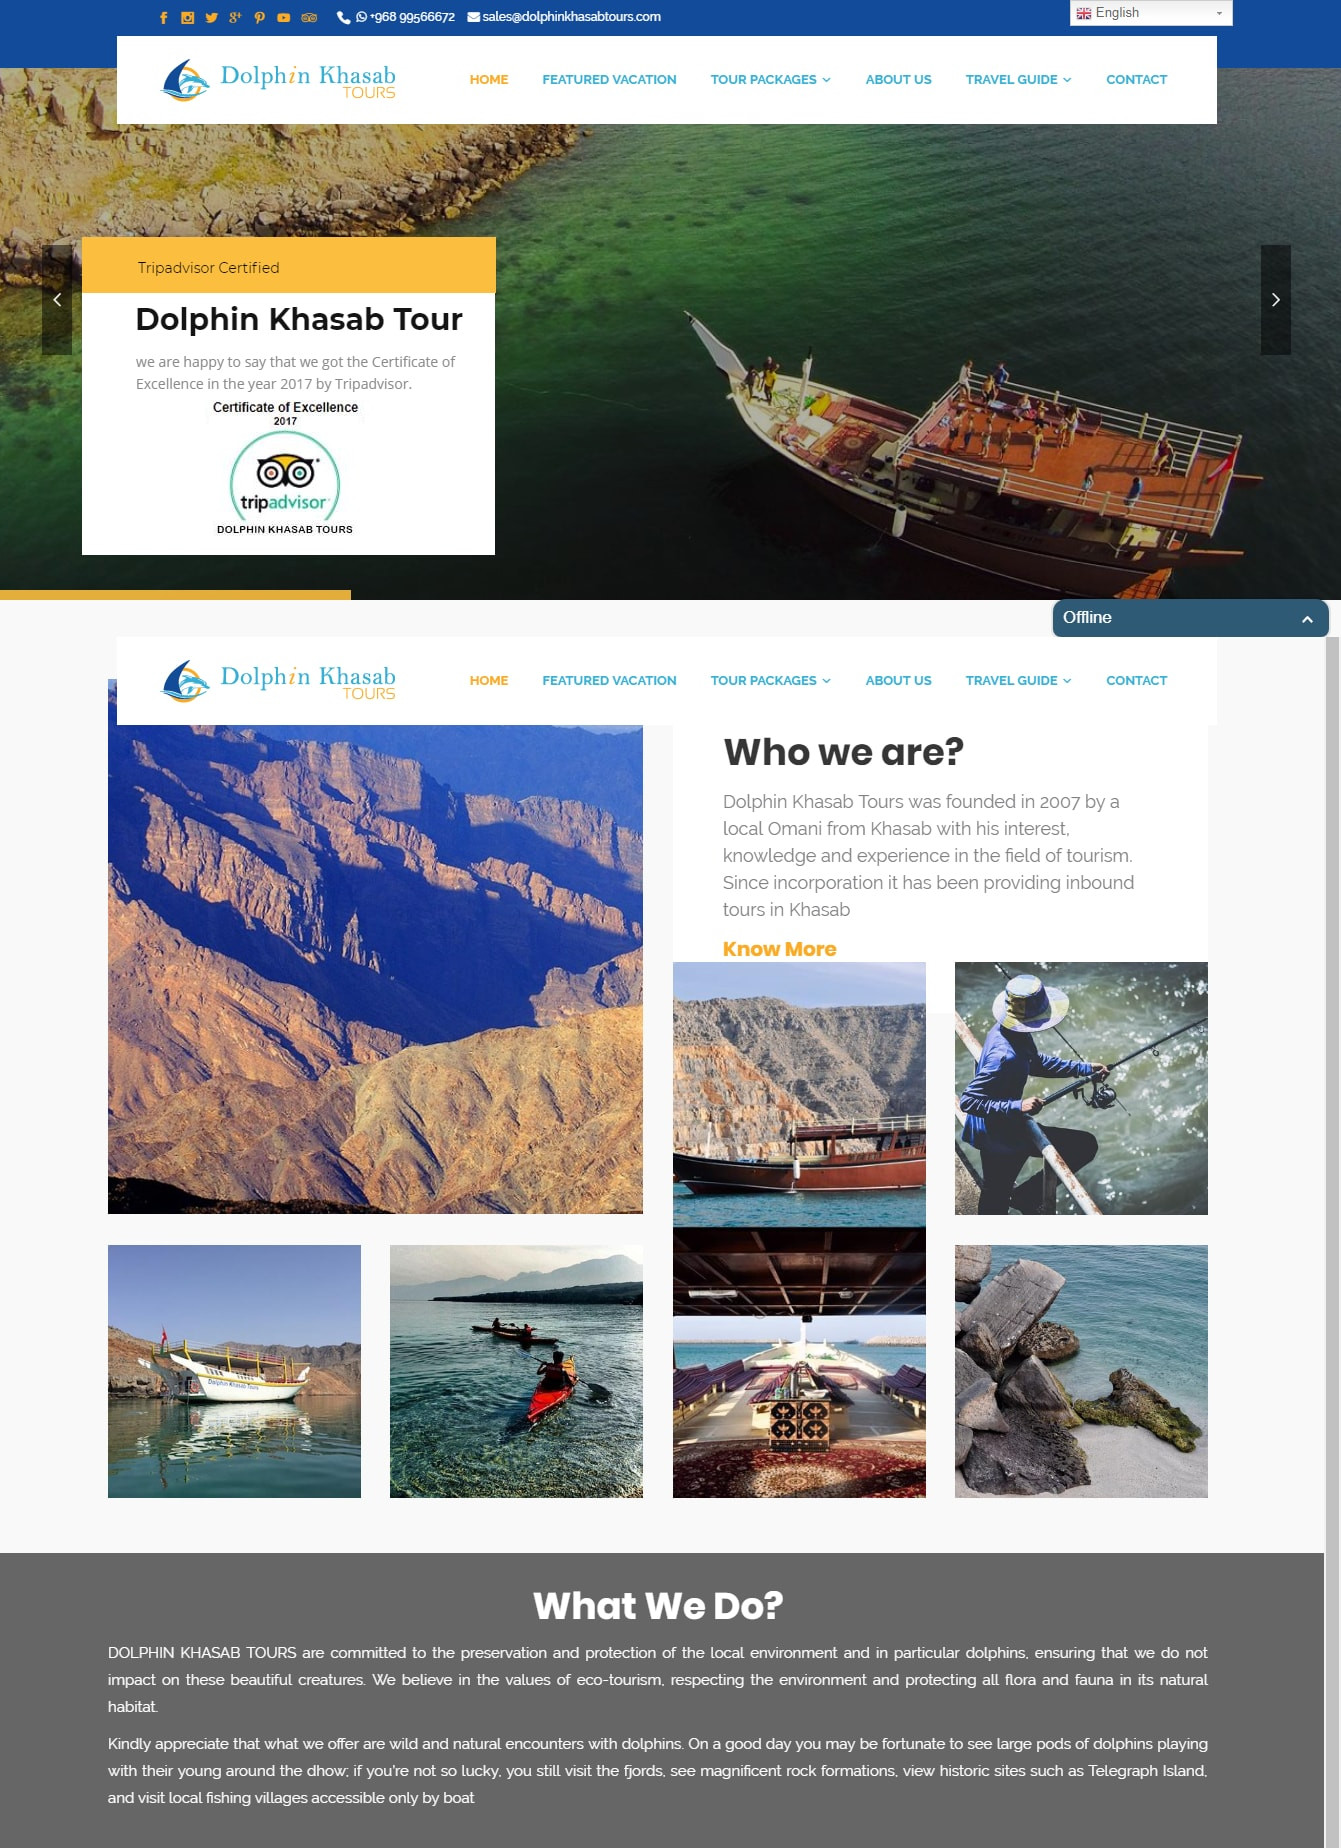 Dolphin Khasab tours